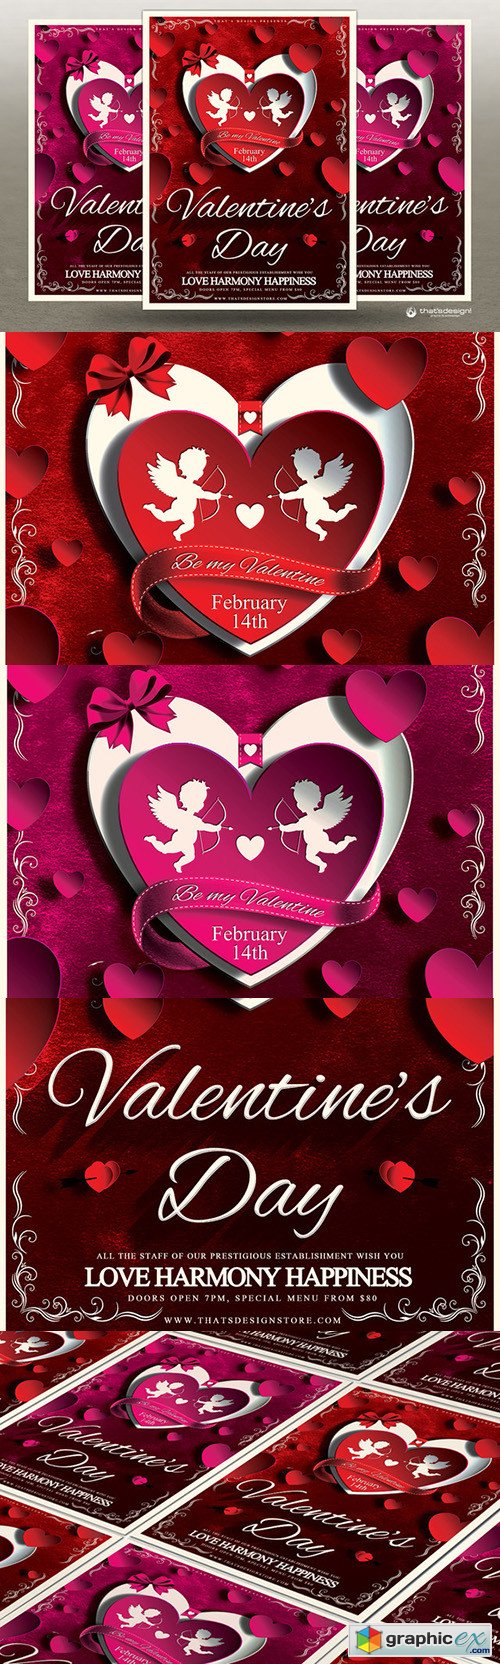  Valentines Day Flyer Template V3